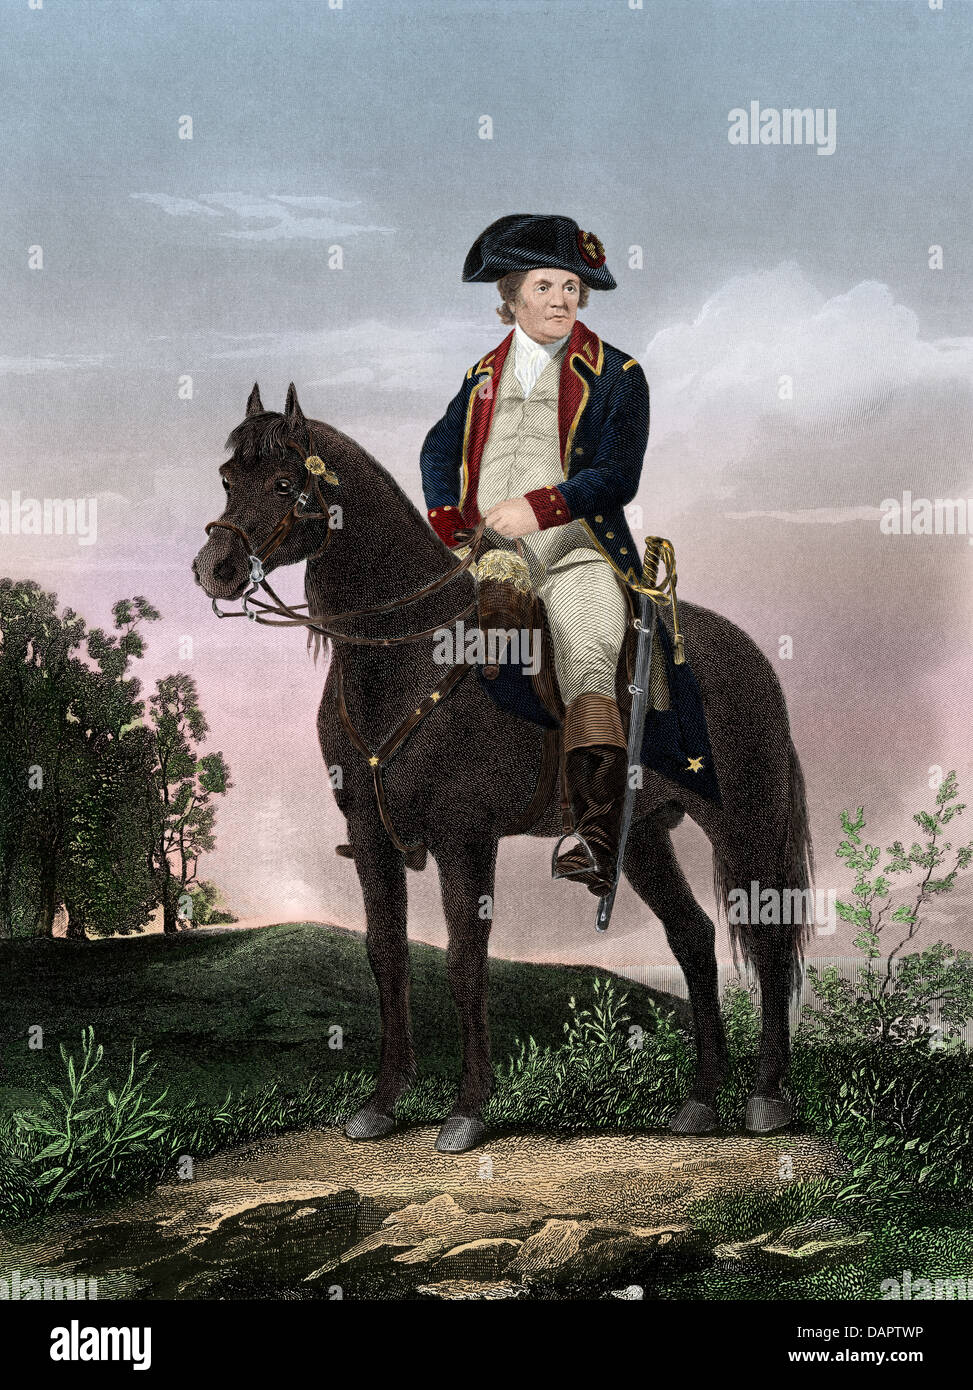 General Israel Putnam on horseback, Revolutionary War Hand-colored steel engraving Stock Photo